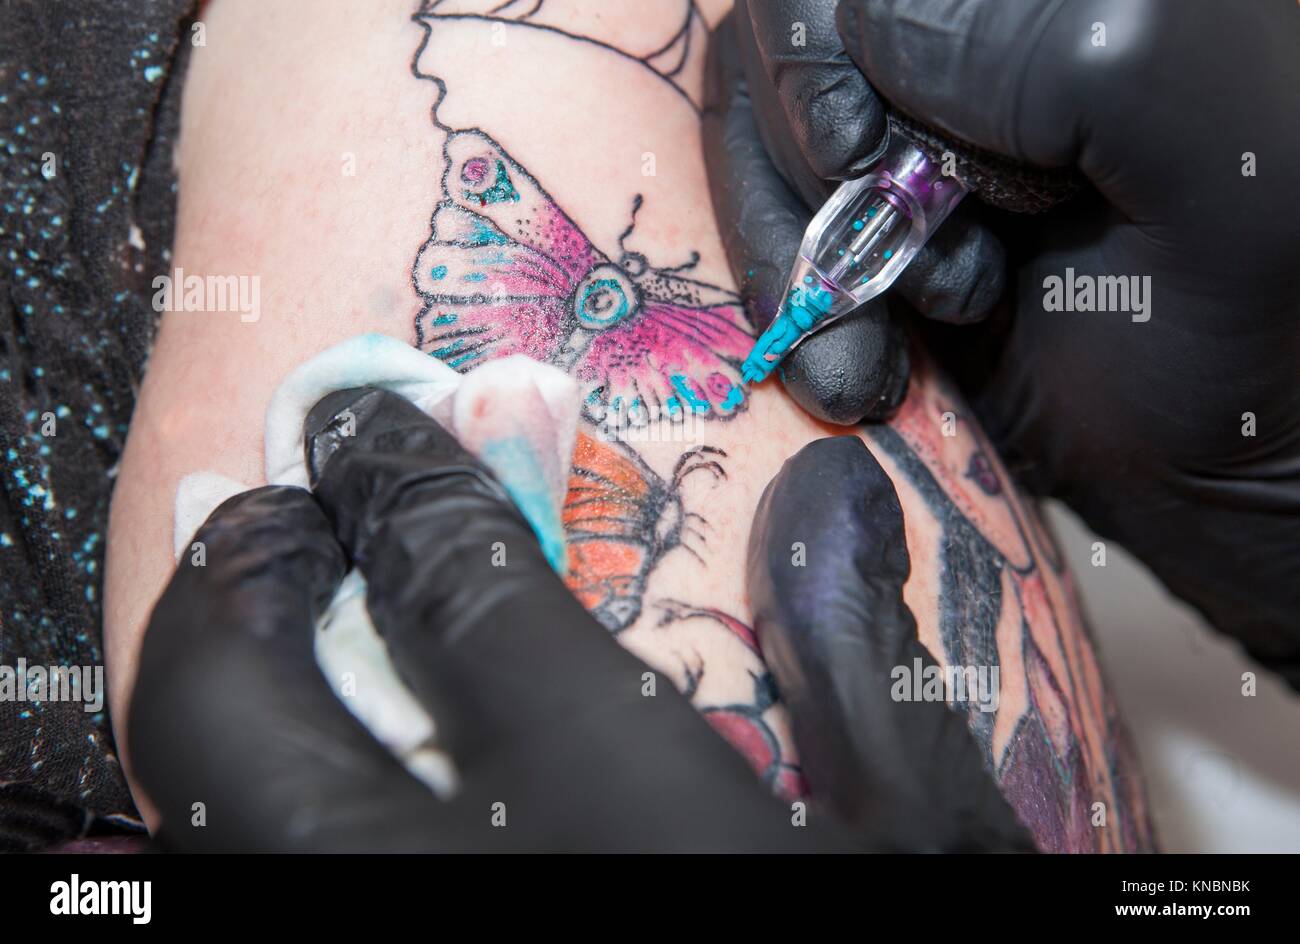 Tatuajes Tatuajes se aplica al brazo. Ella se está llenando de color azul claro el tatuaje. Foto de stock